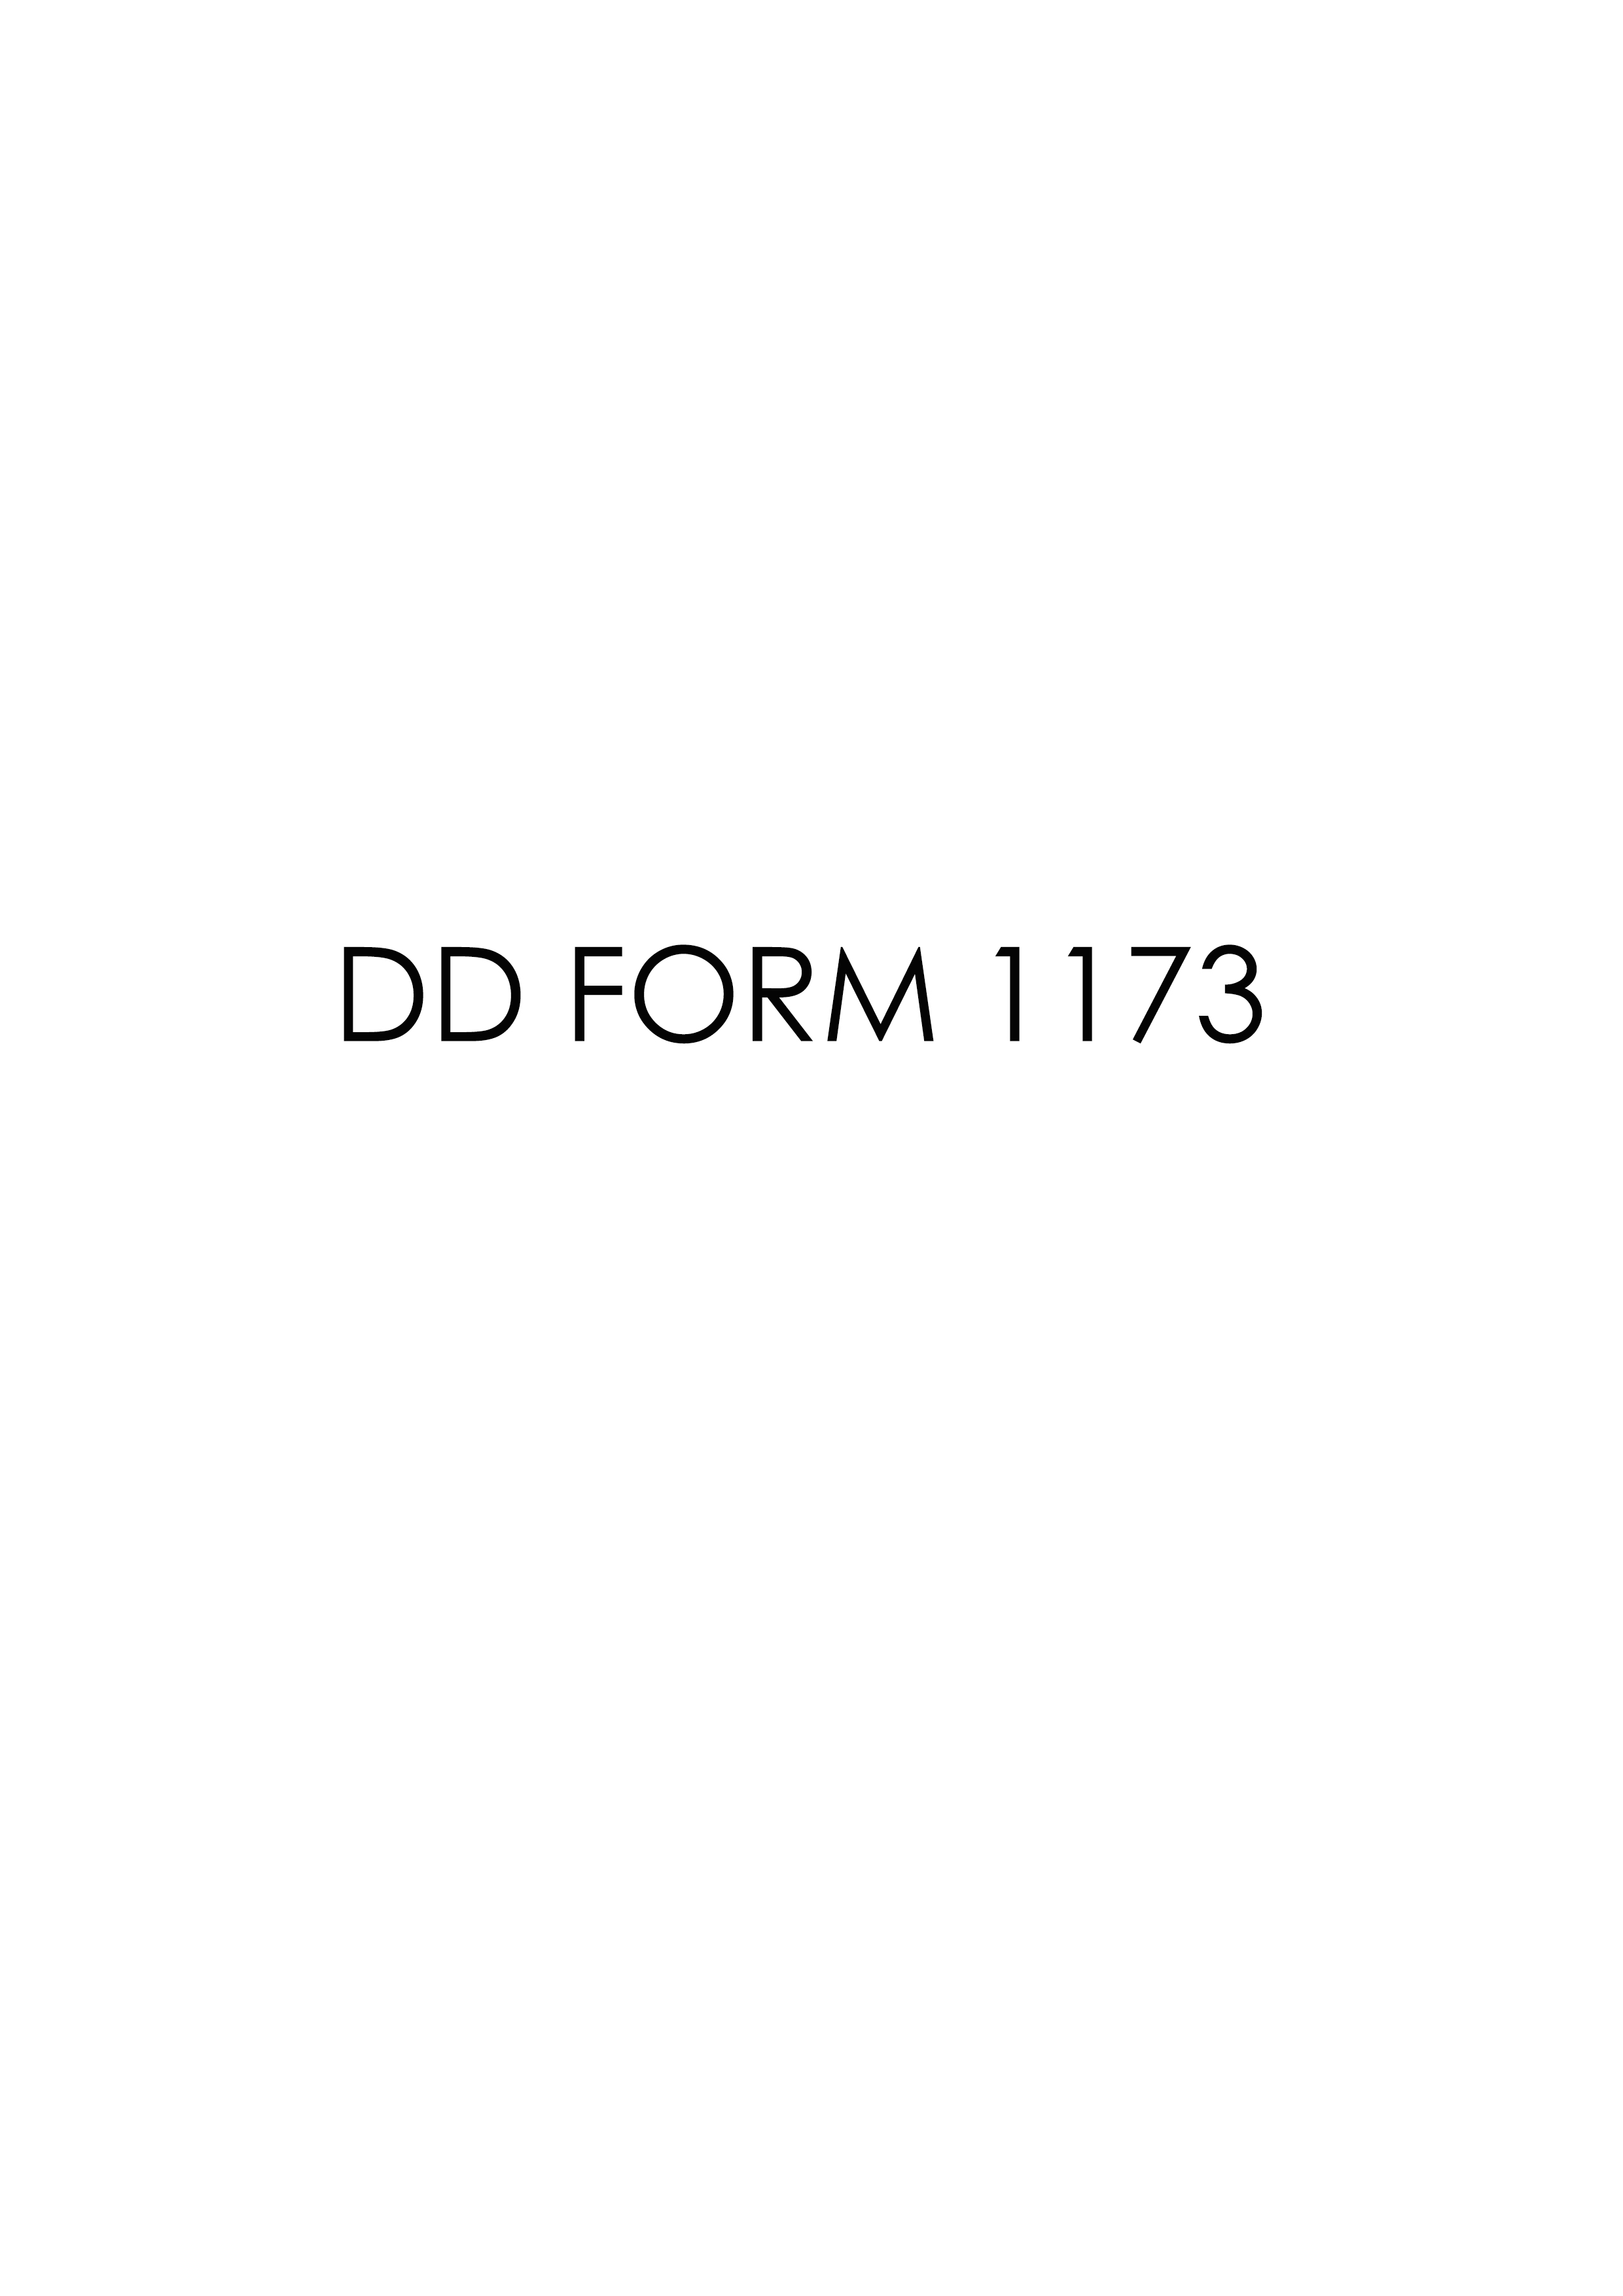 Download dd Form 1173